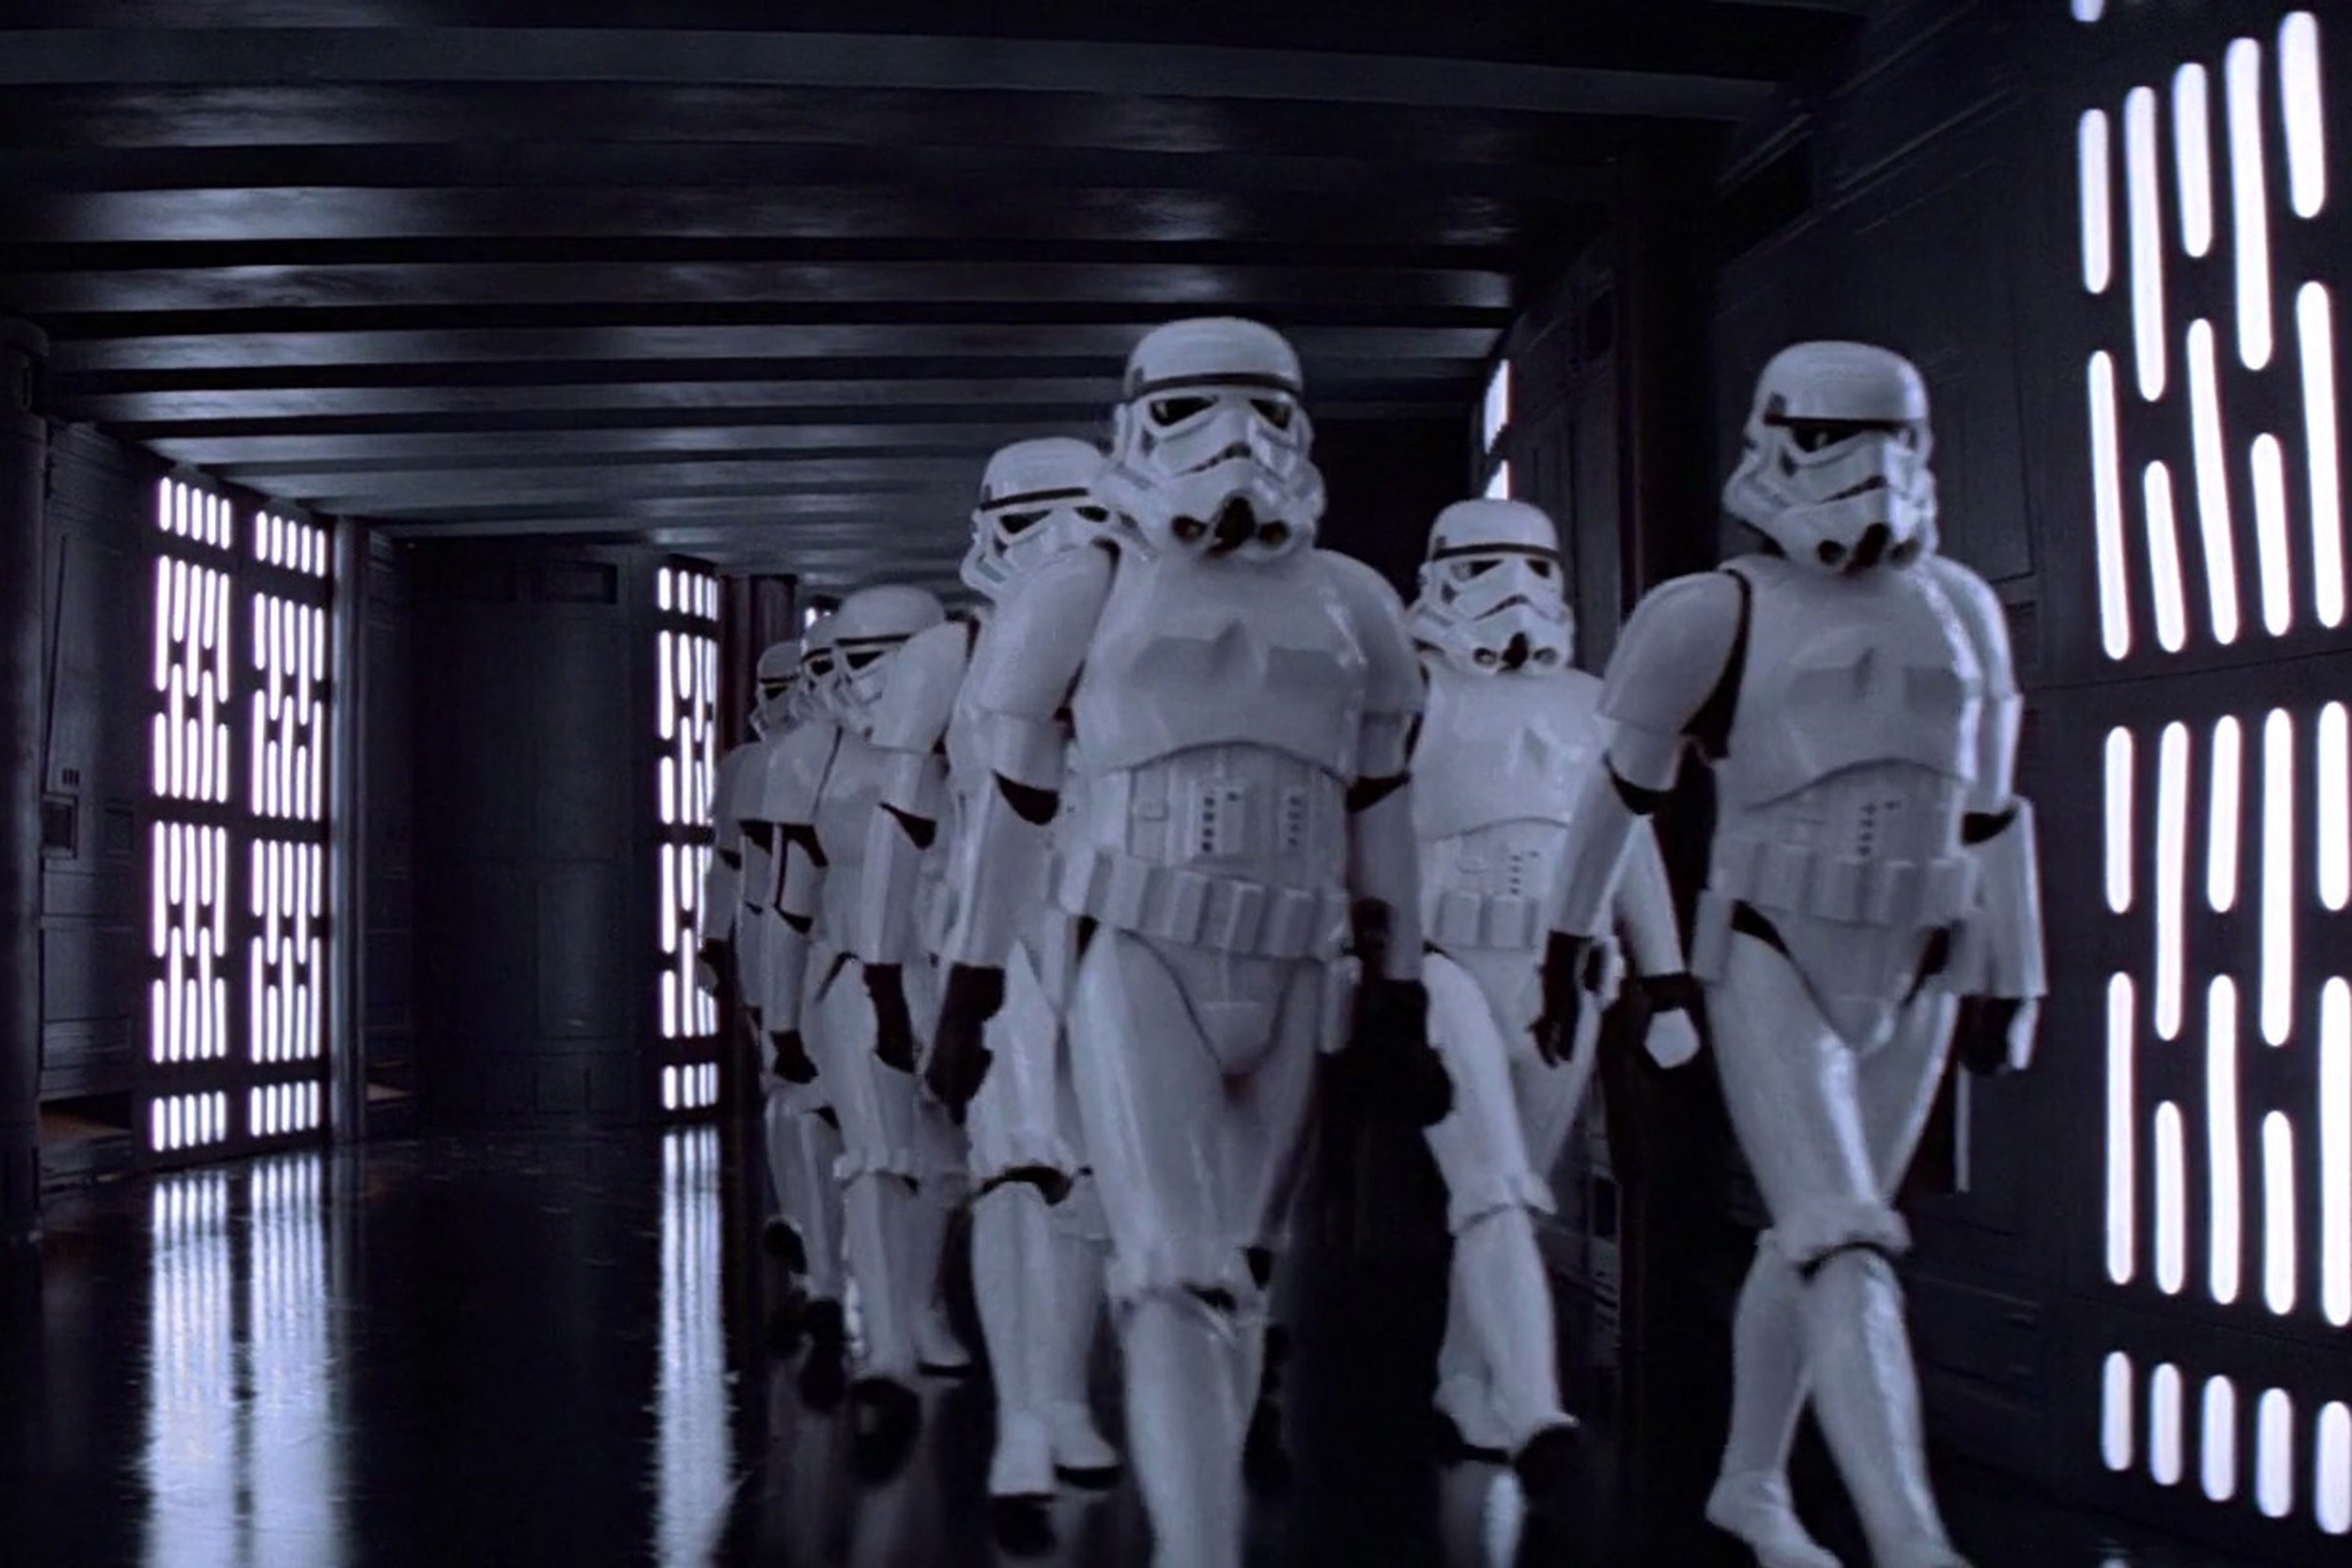 The original stormtroopers.